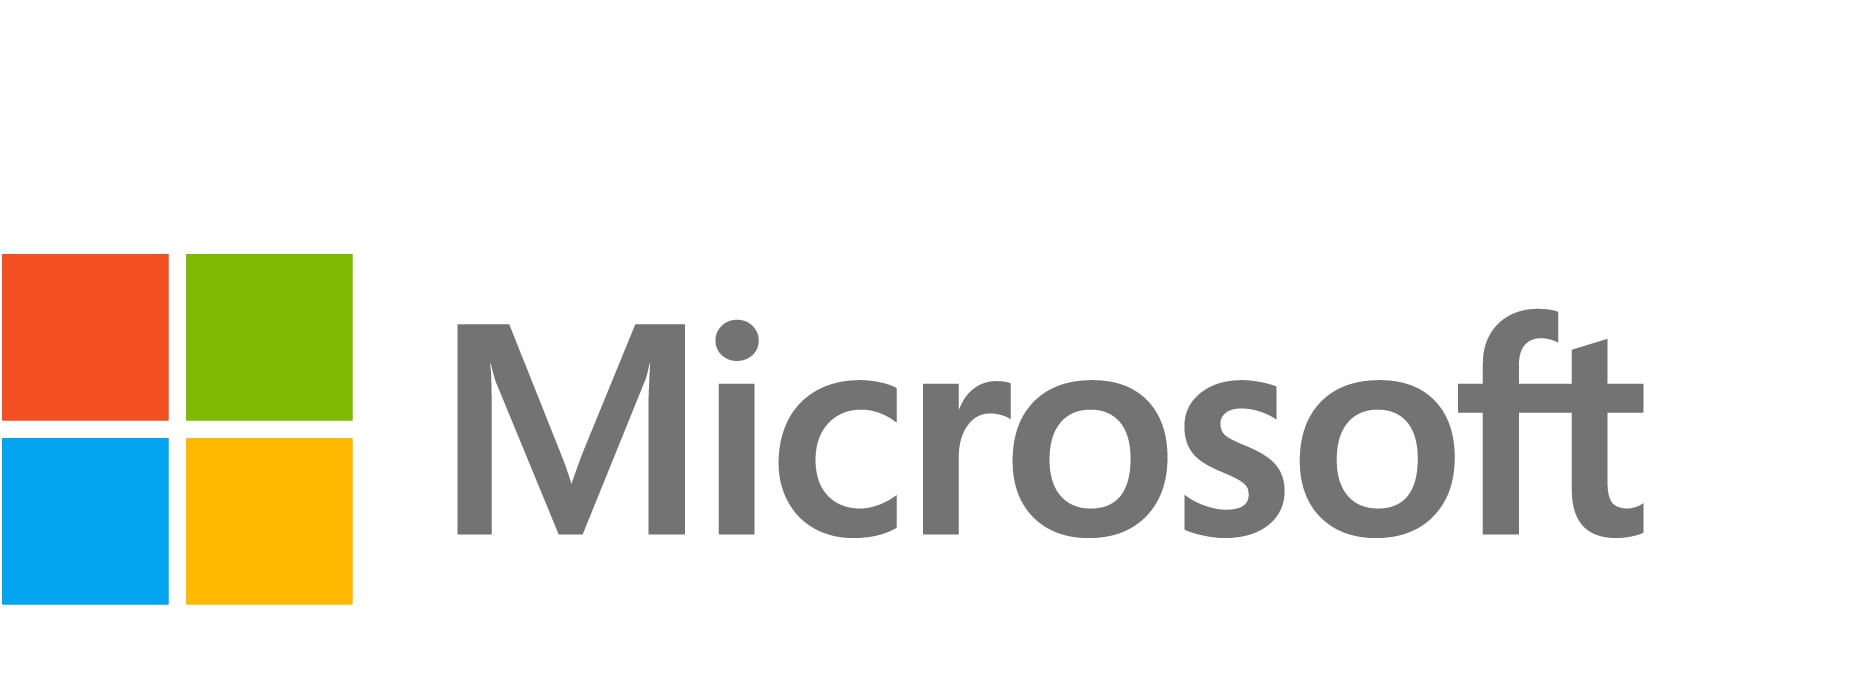 Microsoft Dynamics 365 for Field Service, Enterprise Edition - subscription license - 1 user